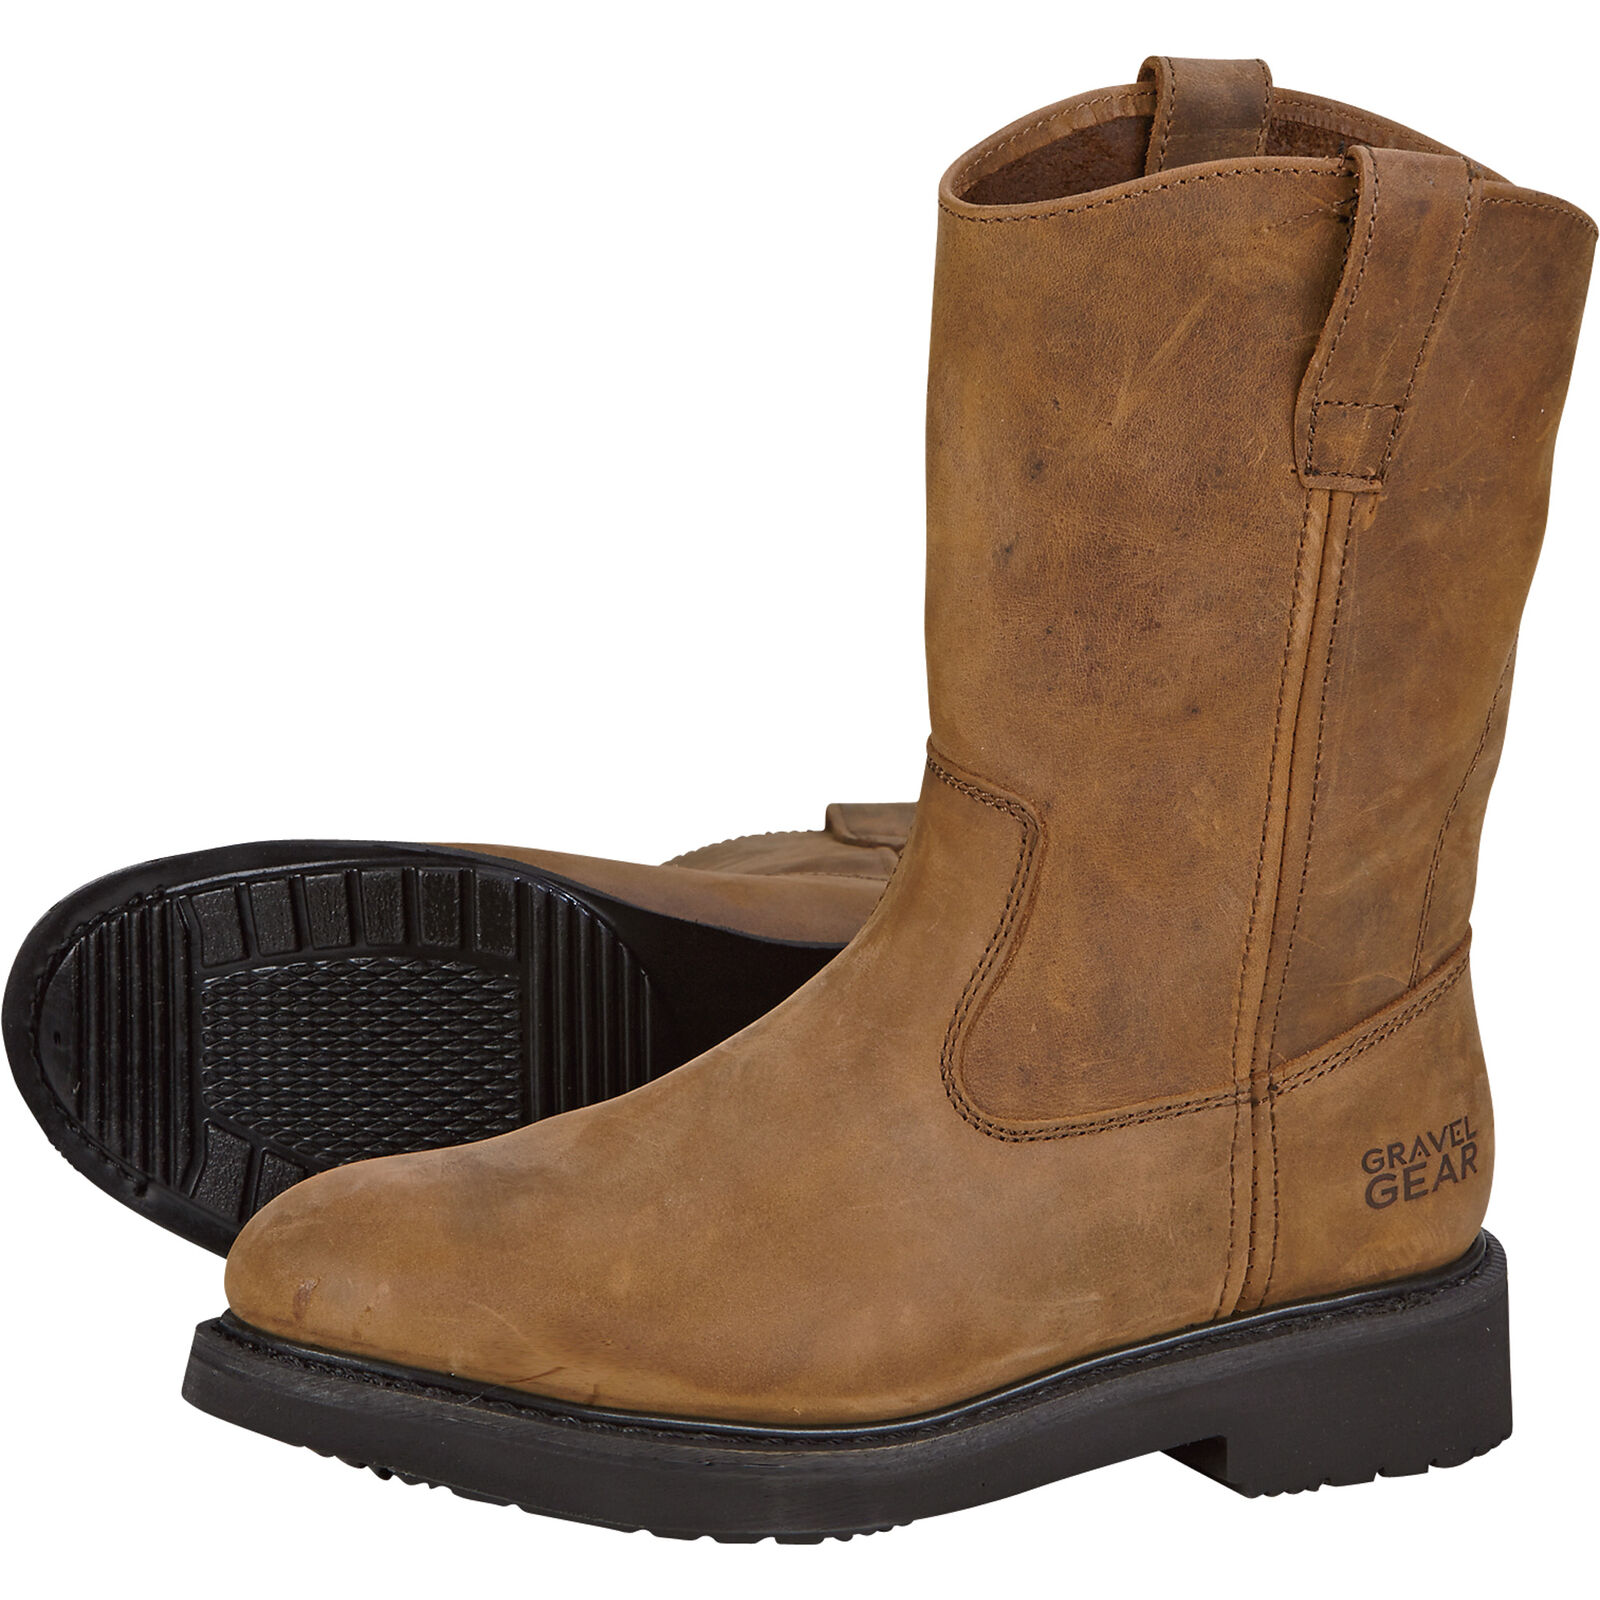 Gravel Gear Men's 10in. Wellington Boots - Brown, Size 11 1/2